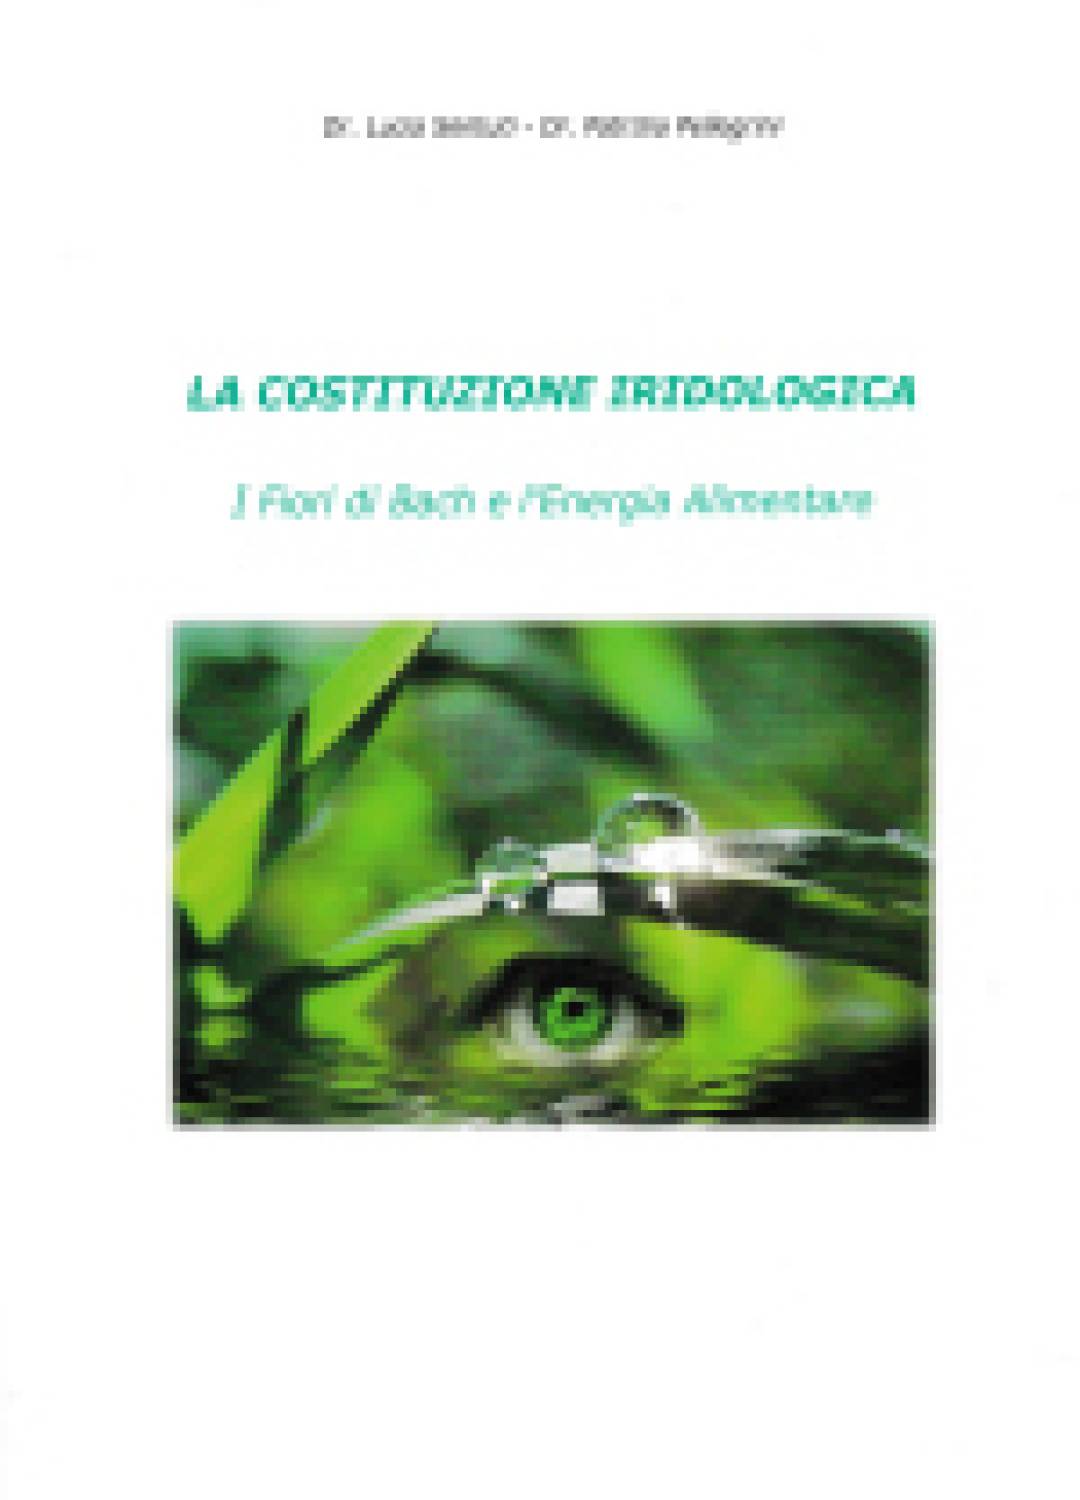 La costituzione iridologica - Sentuti, Pellegrini